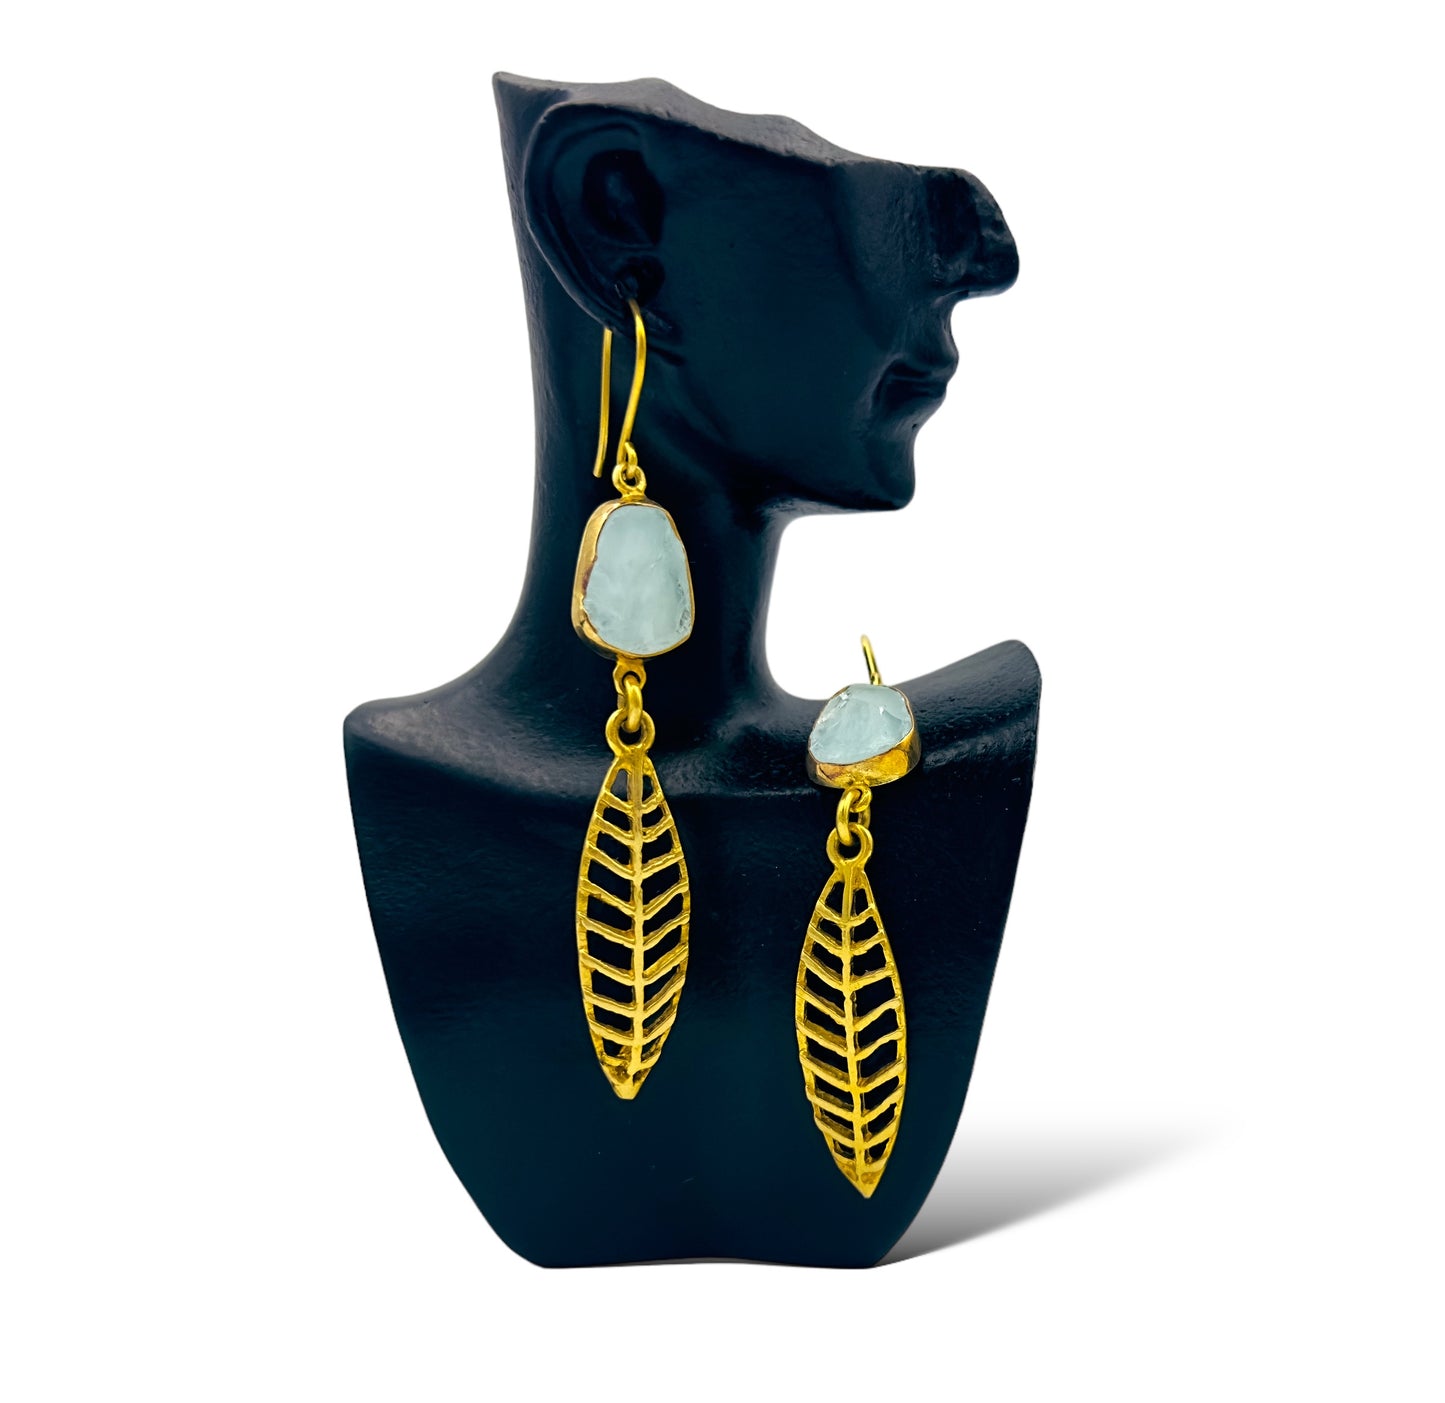 Silver leaf design earrings with aqua Quartz stones